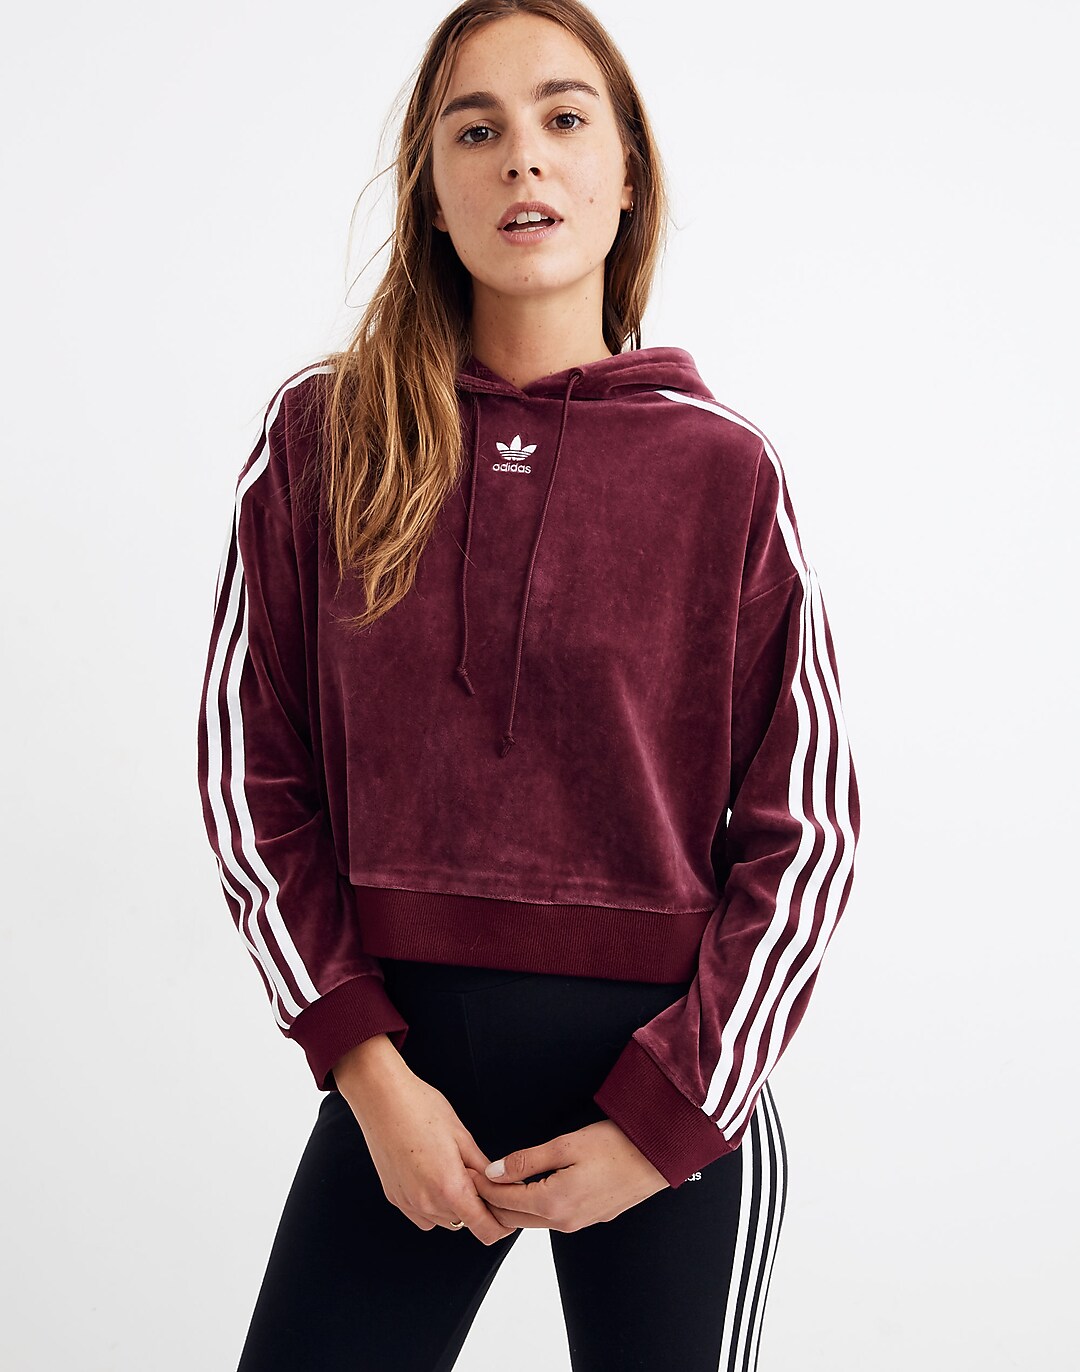 Velour Sweatshirt Adidas® Originals Hoodie Cropped